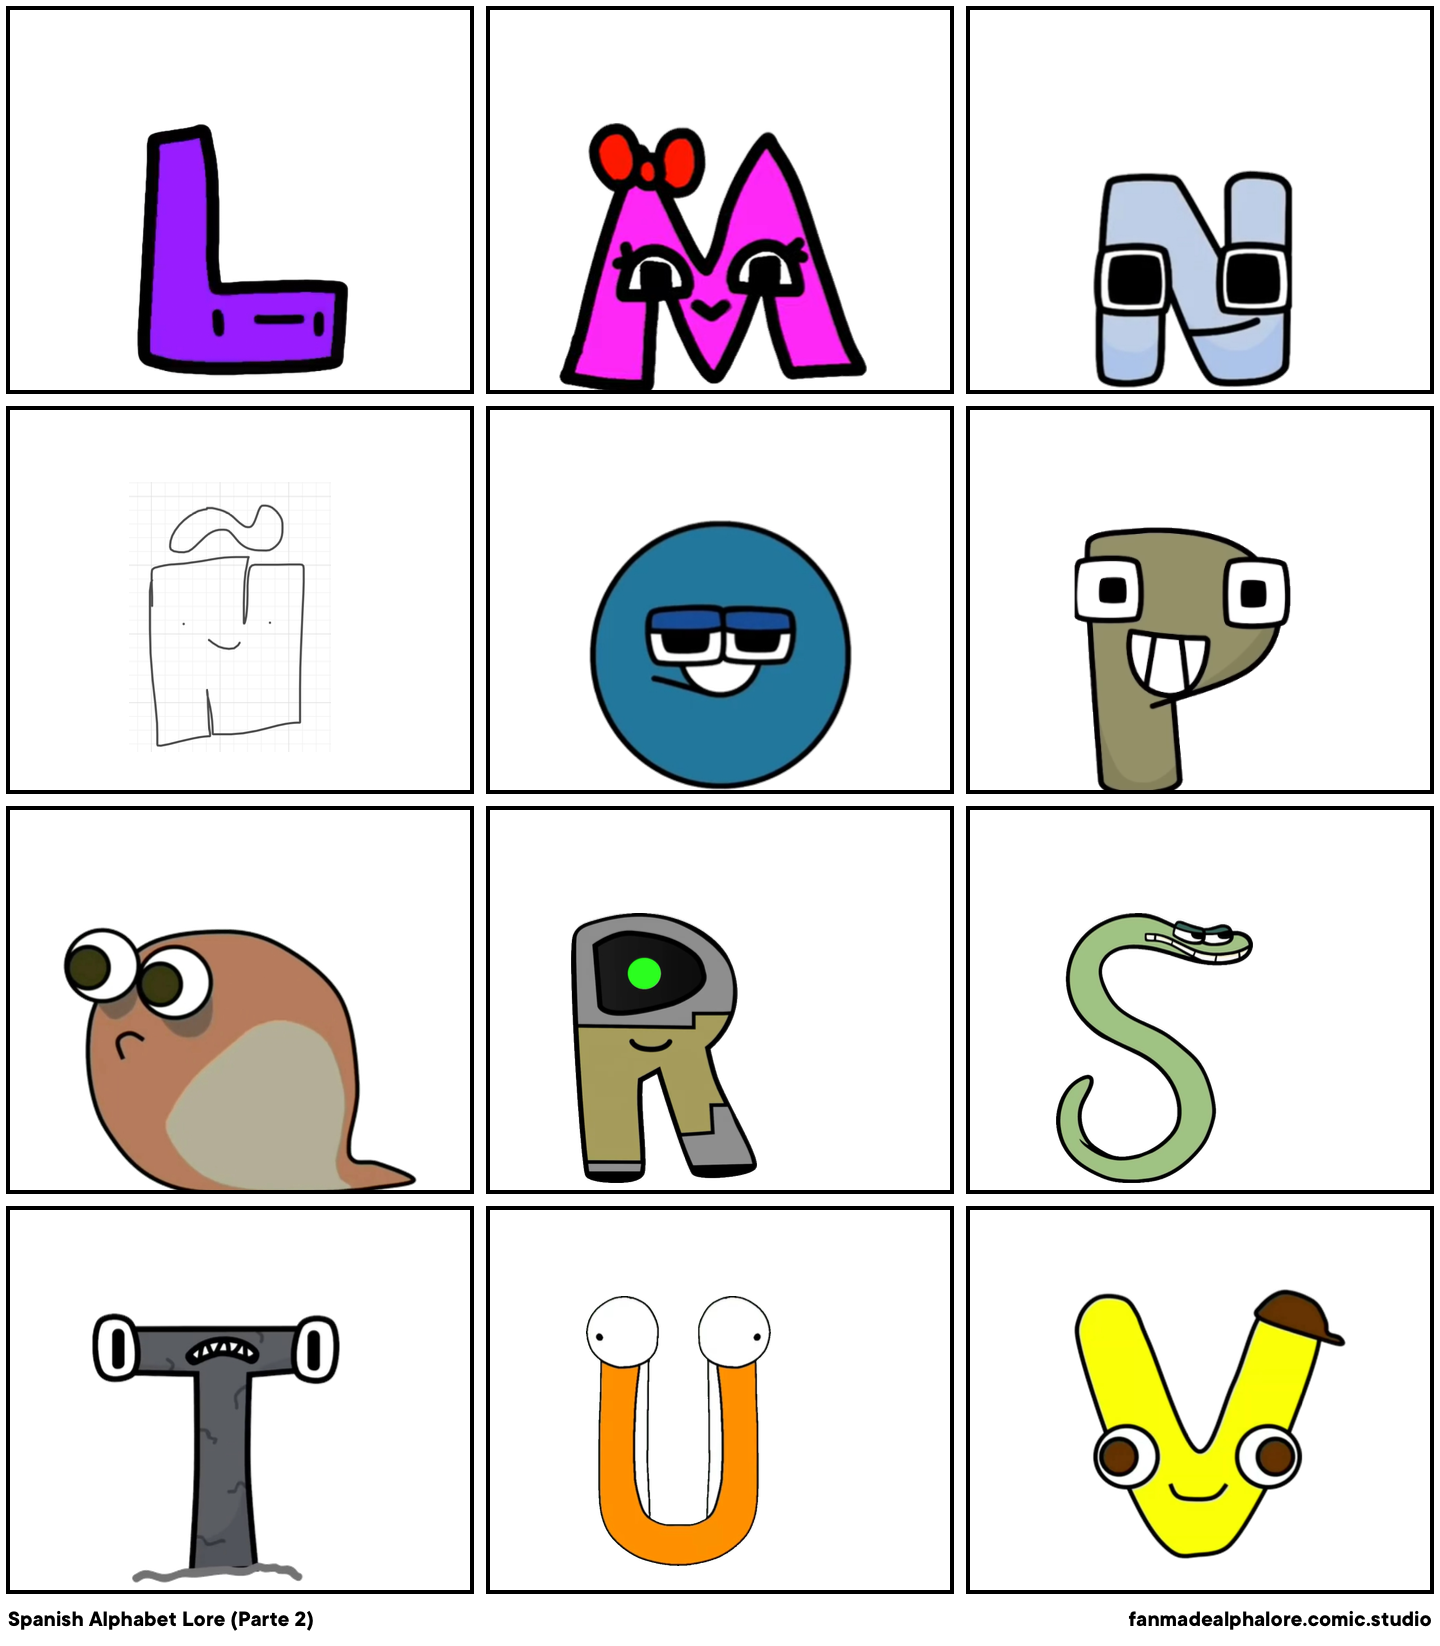 Spanish Alphabet Lore: The Sequel Comic Studio - make comics & memes with Spanish  Alphabet Lore: The Sequel characters